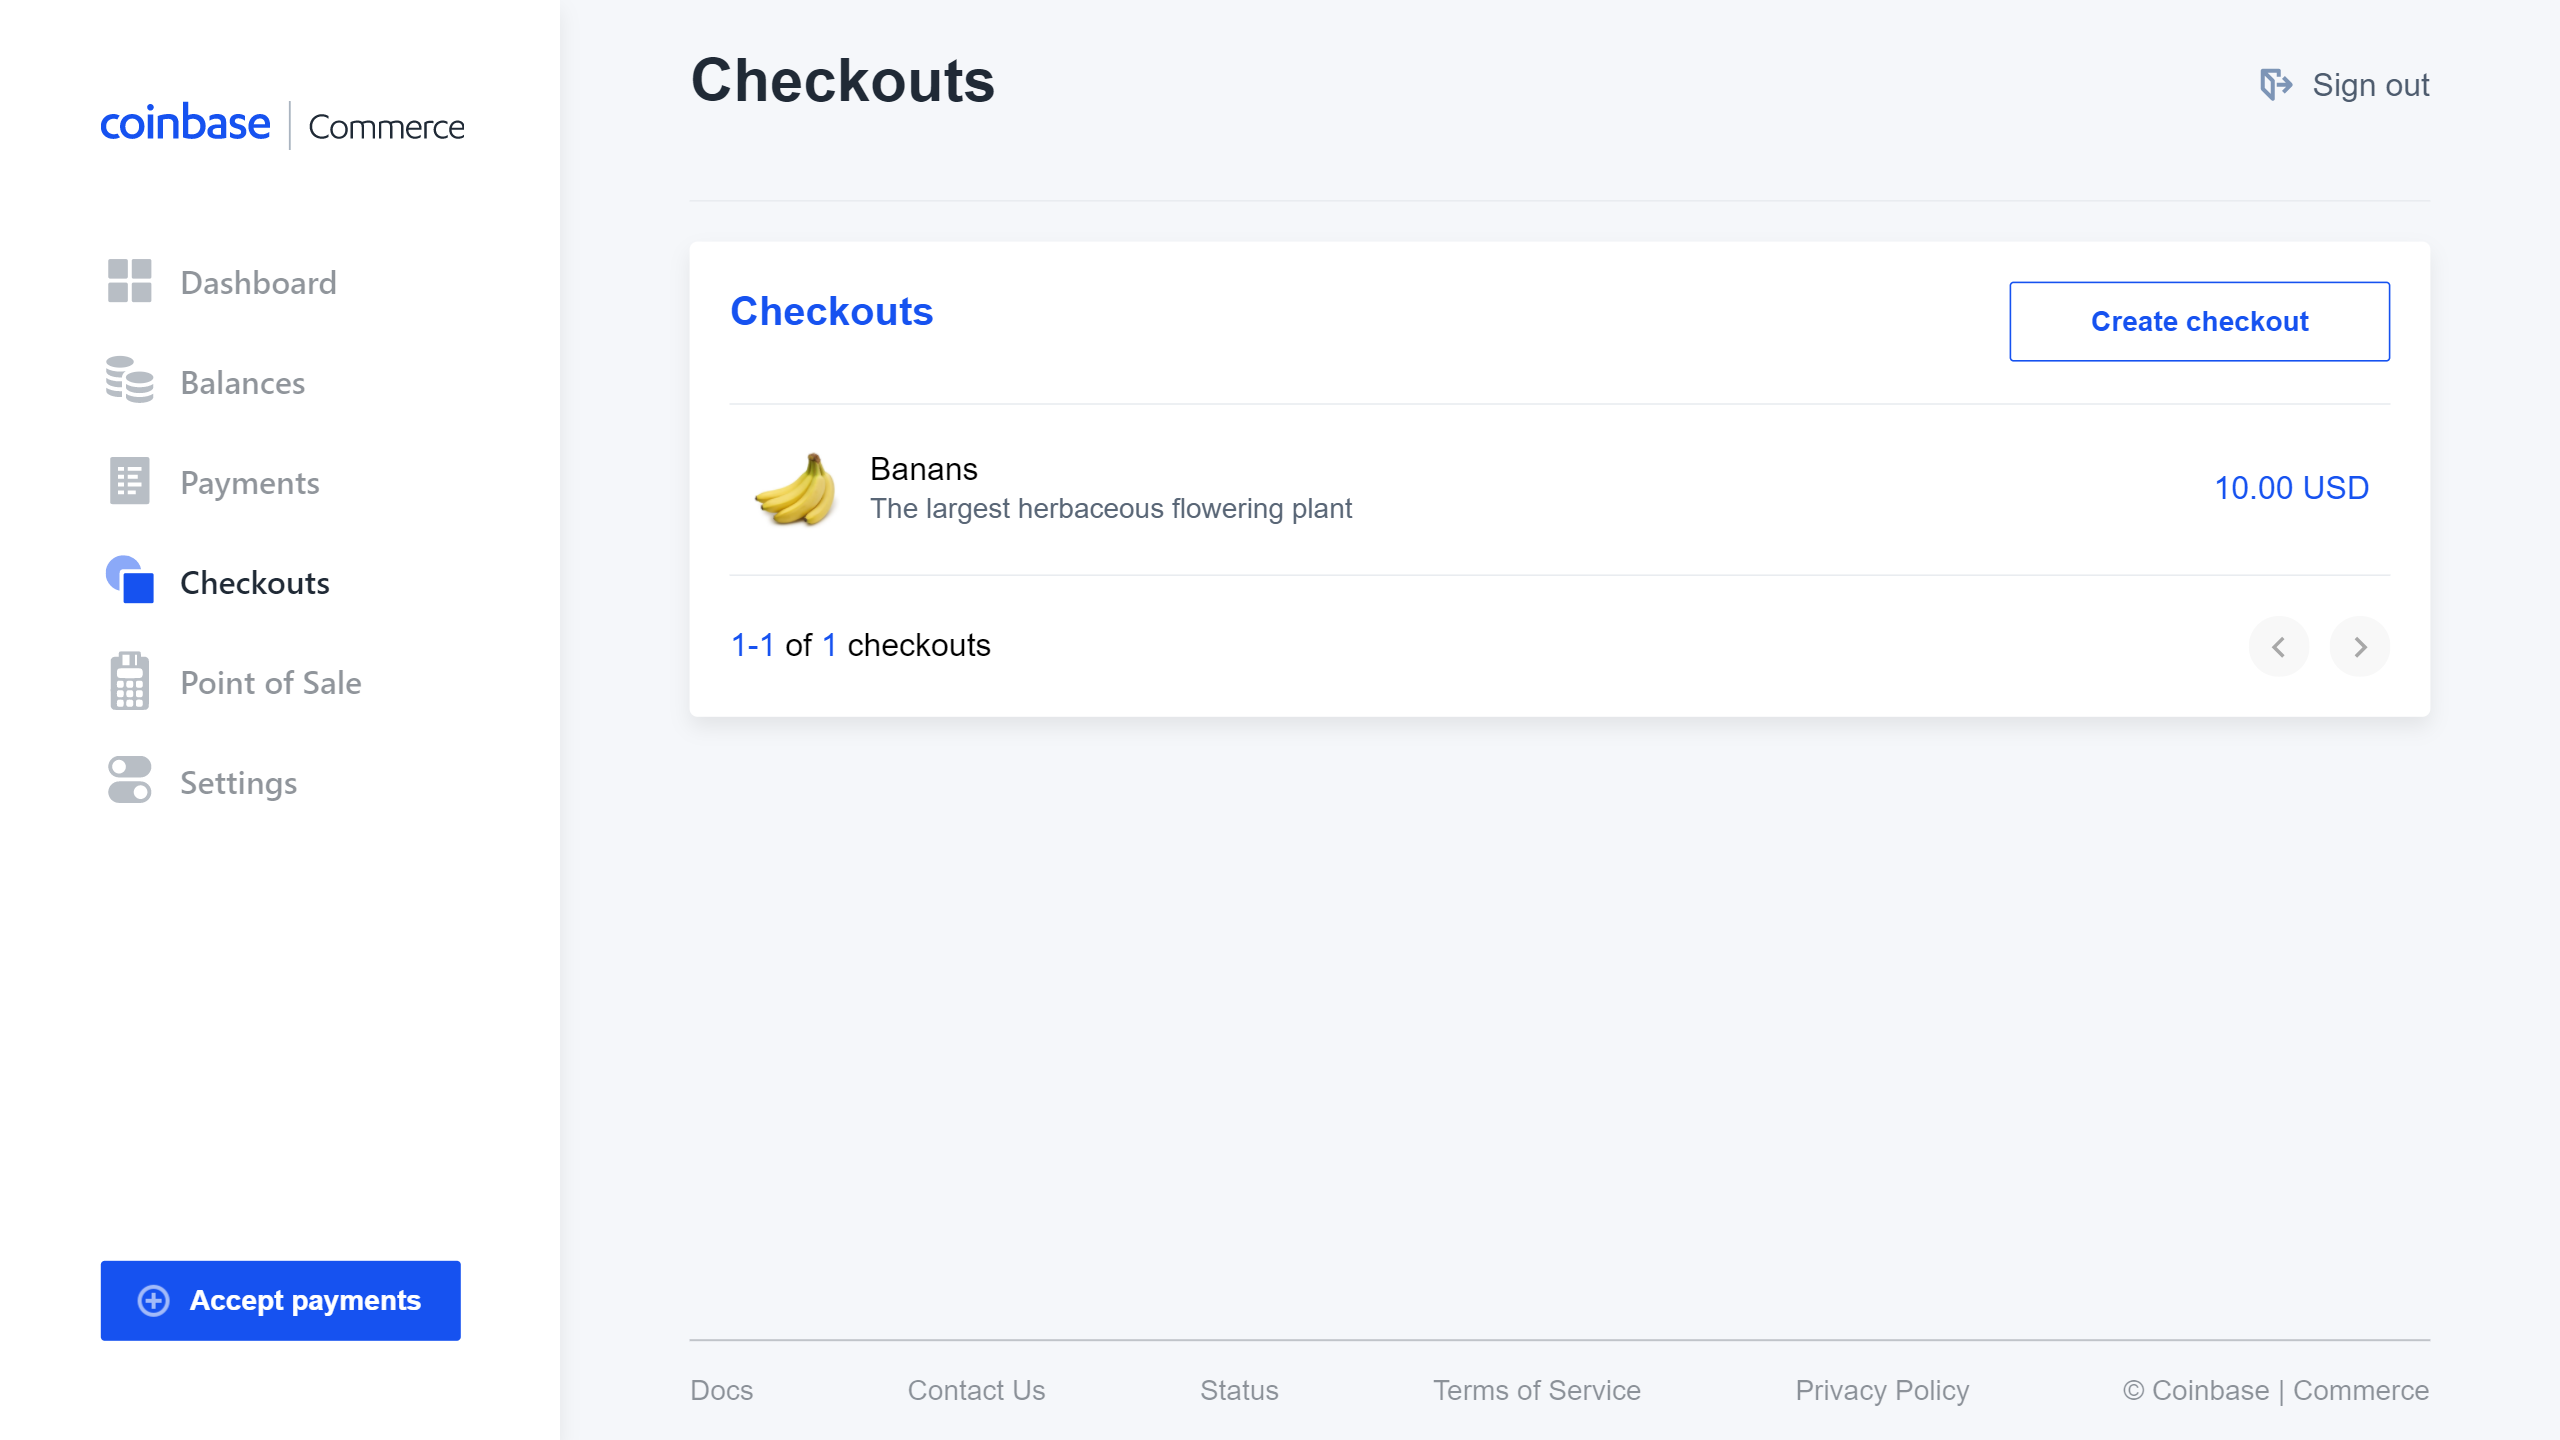 coinbase commerce checkout